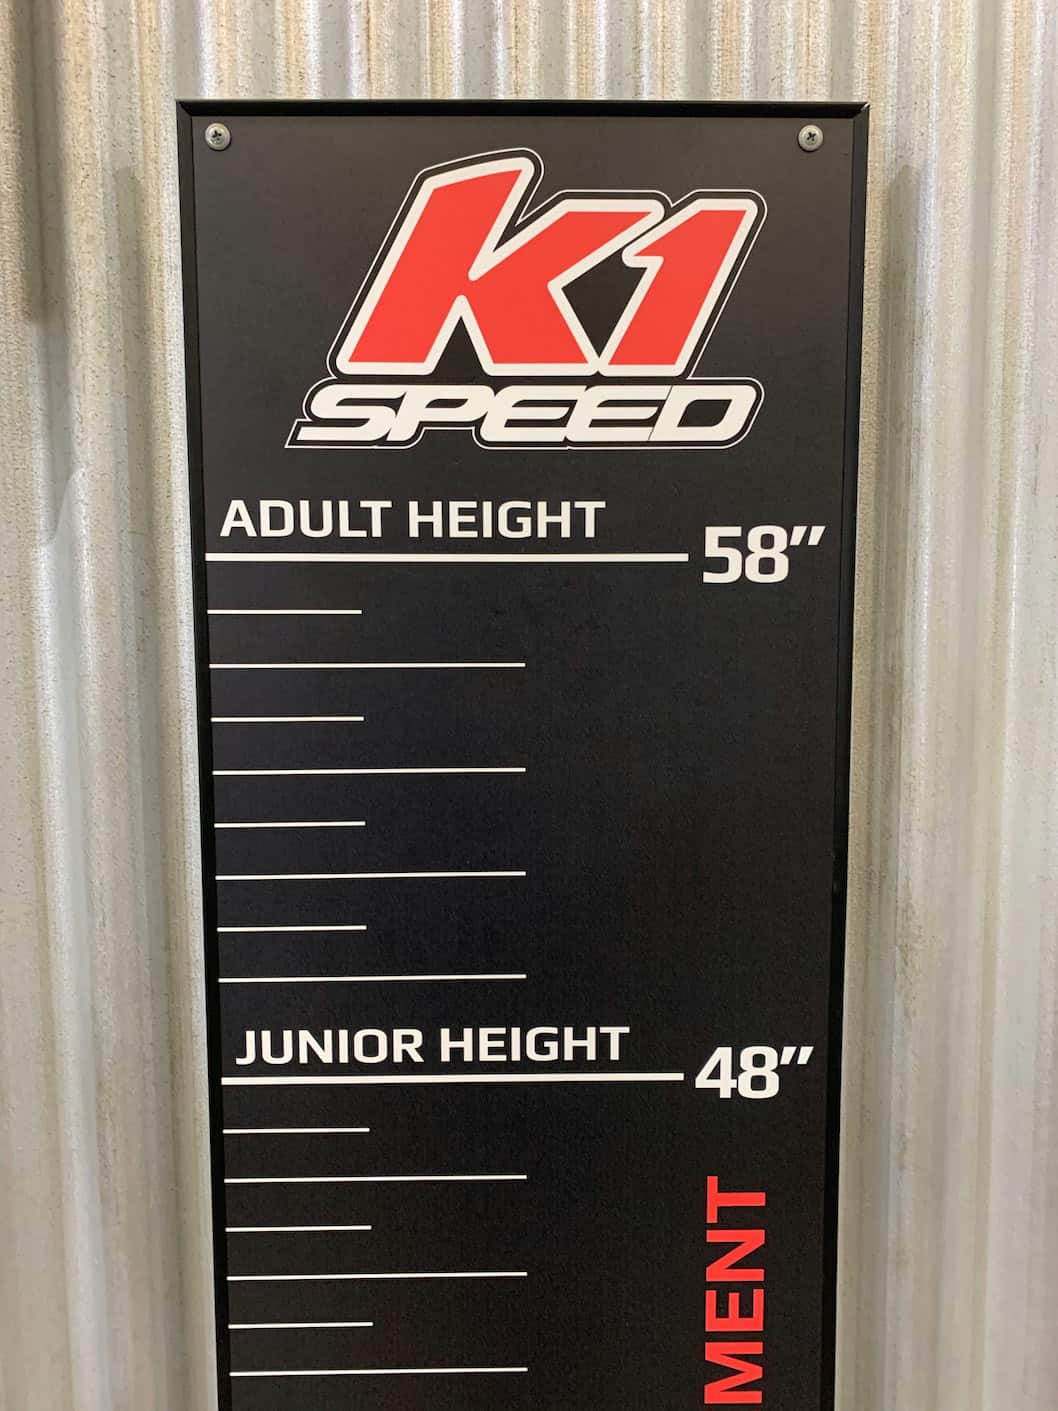 Reasons Go Kart Racing Is Safer At K1 Speed K1 Speed K1 Speed 